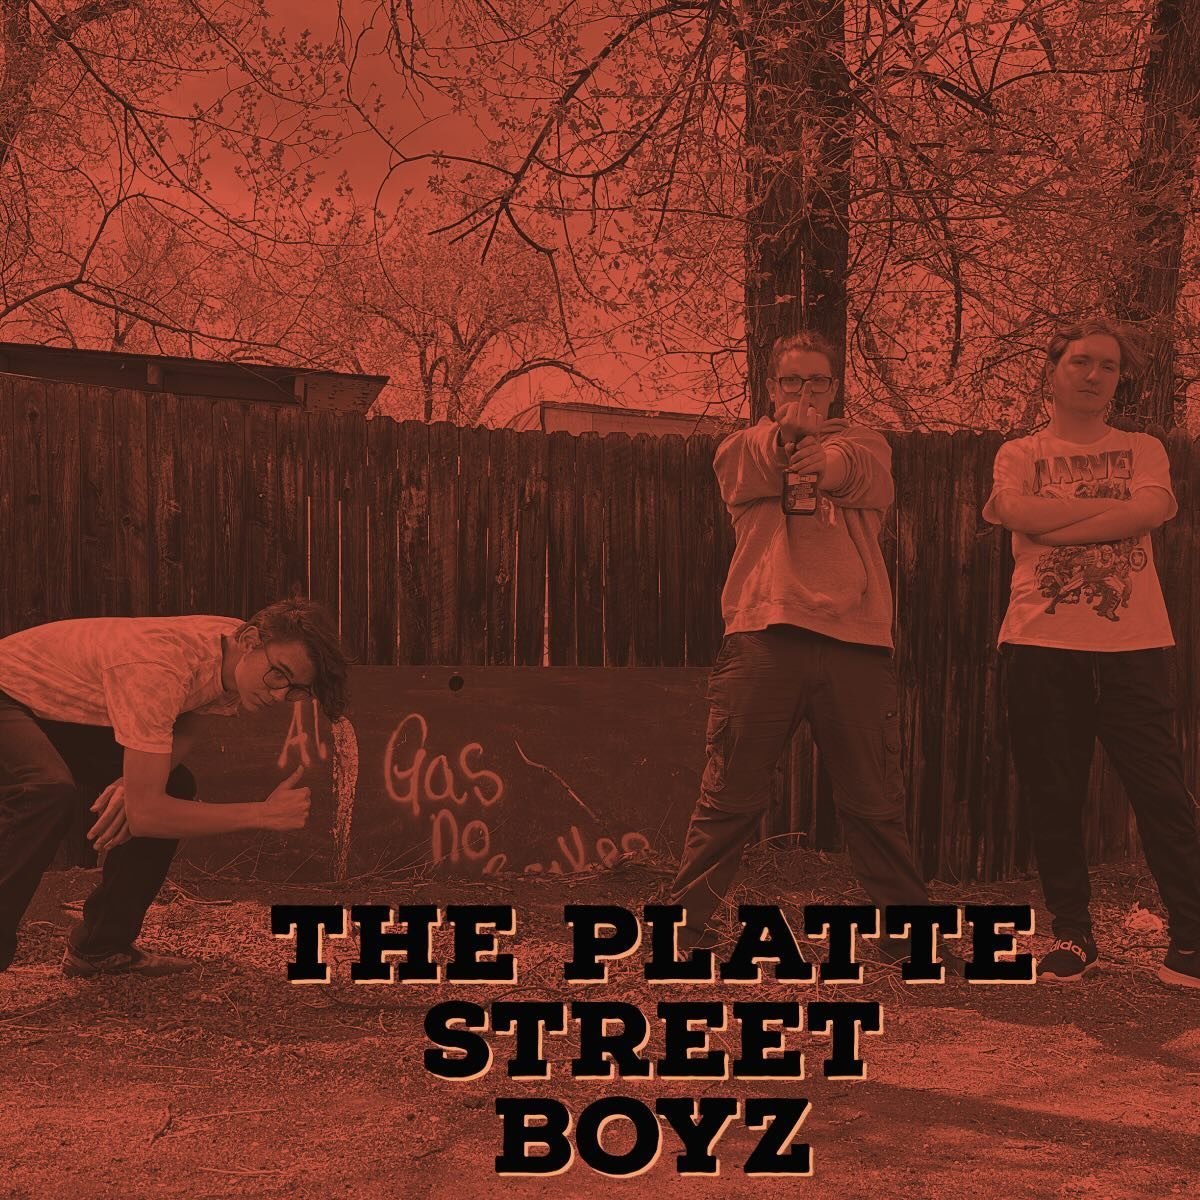 The Platte Street Boyz
#knobhillartdistrict #knobhillkeepsitreal #plattestreetboyz